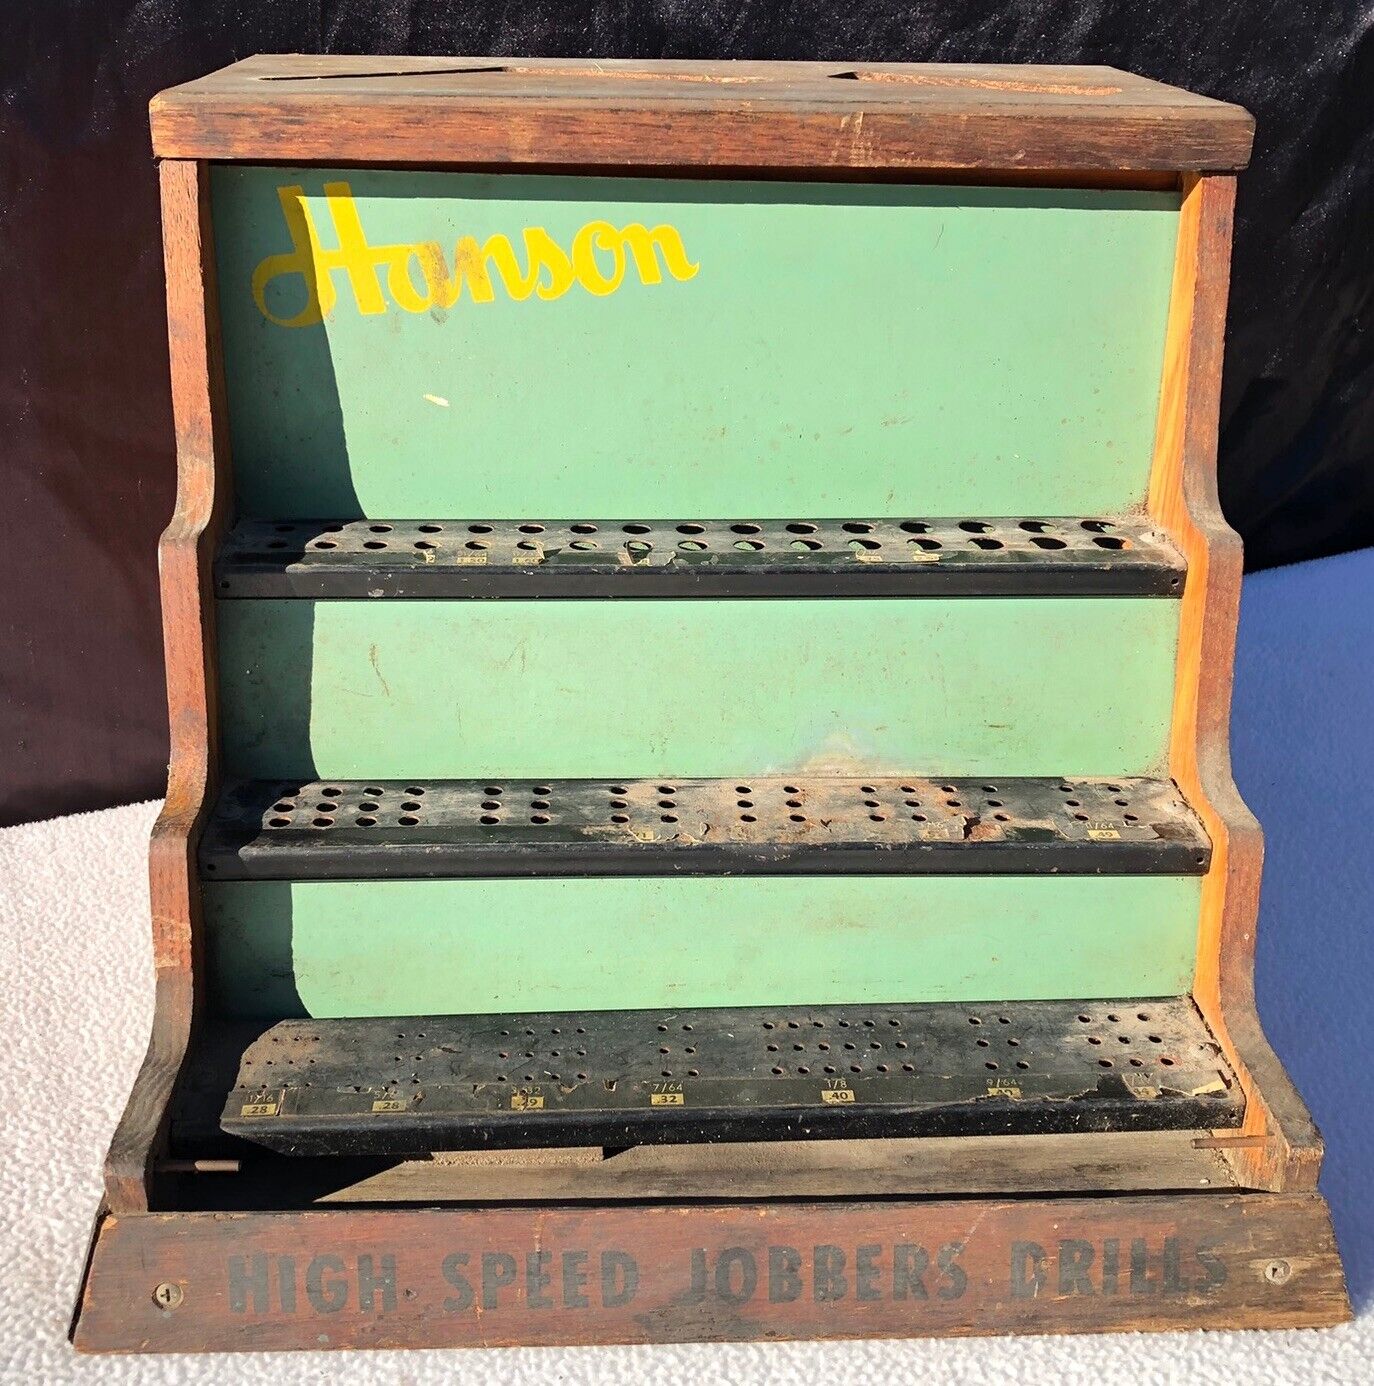 Circa 1950's Oak Bow Front Hanson High Speed Jobber Drill Bits Show Case